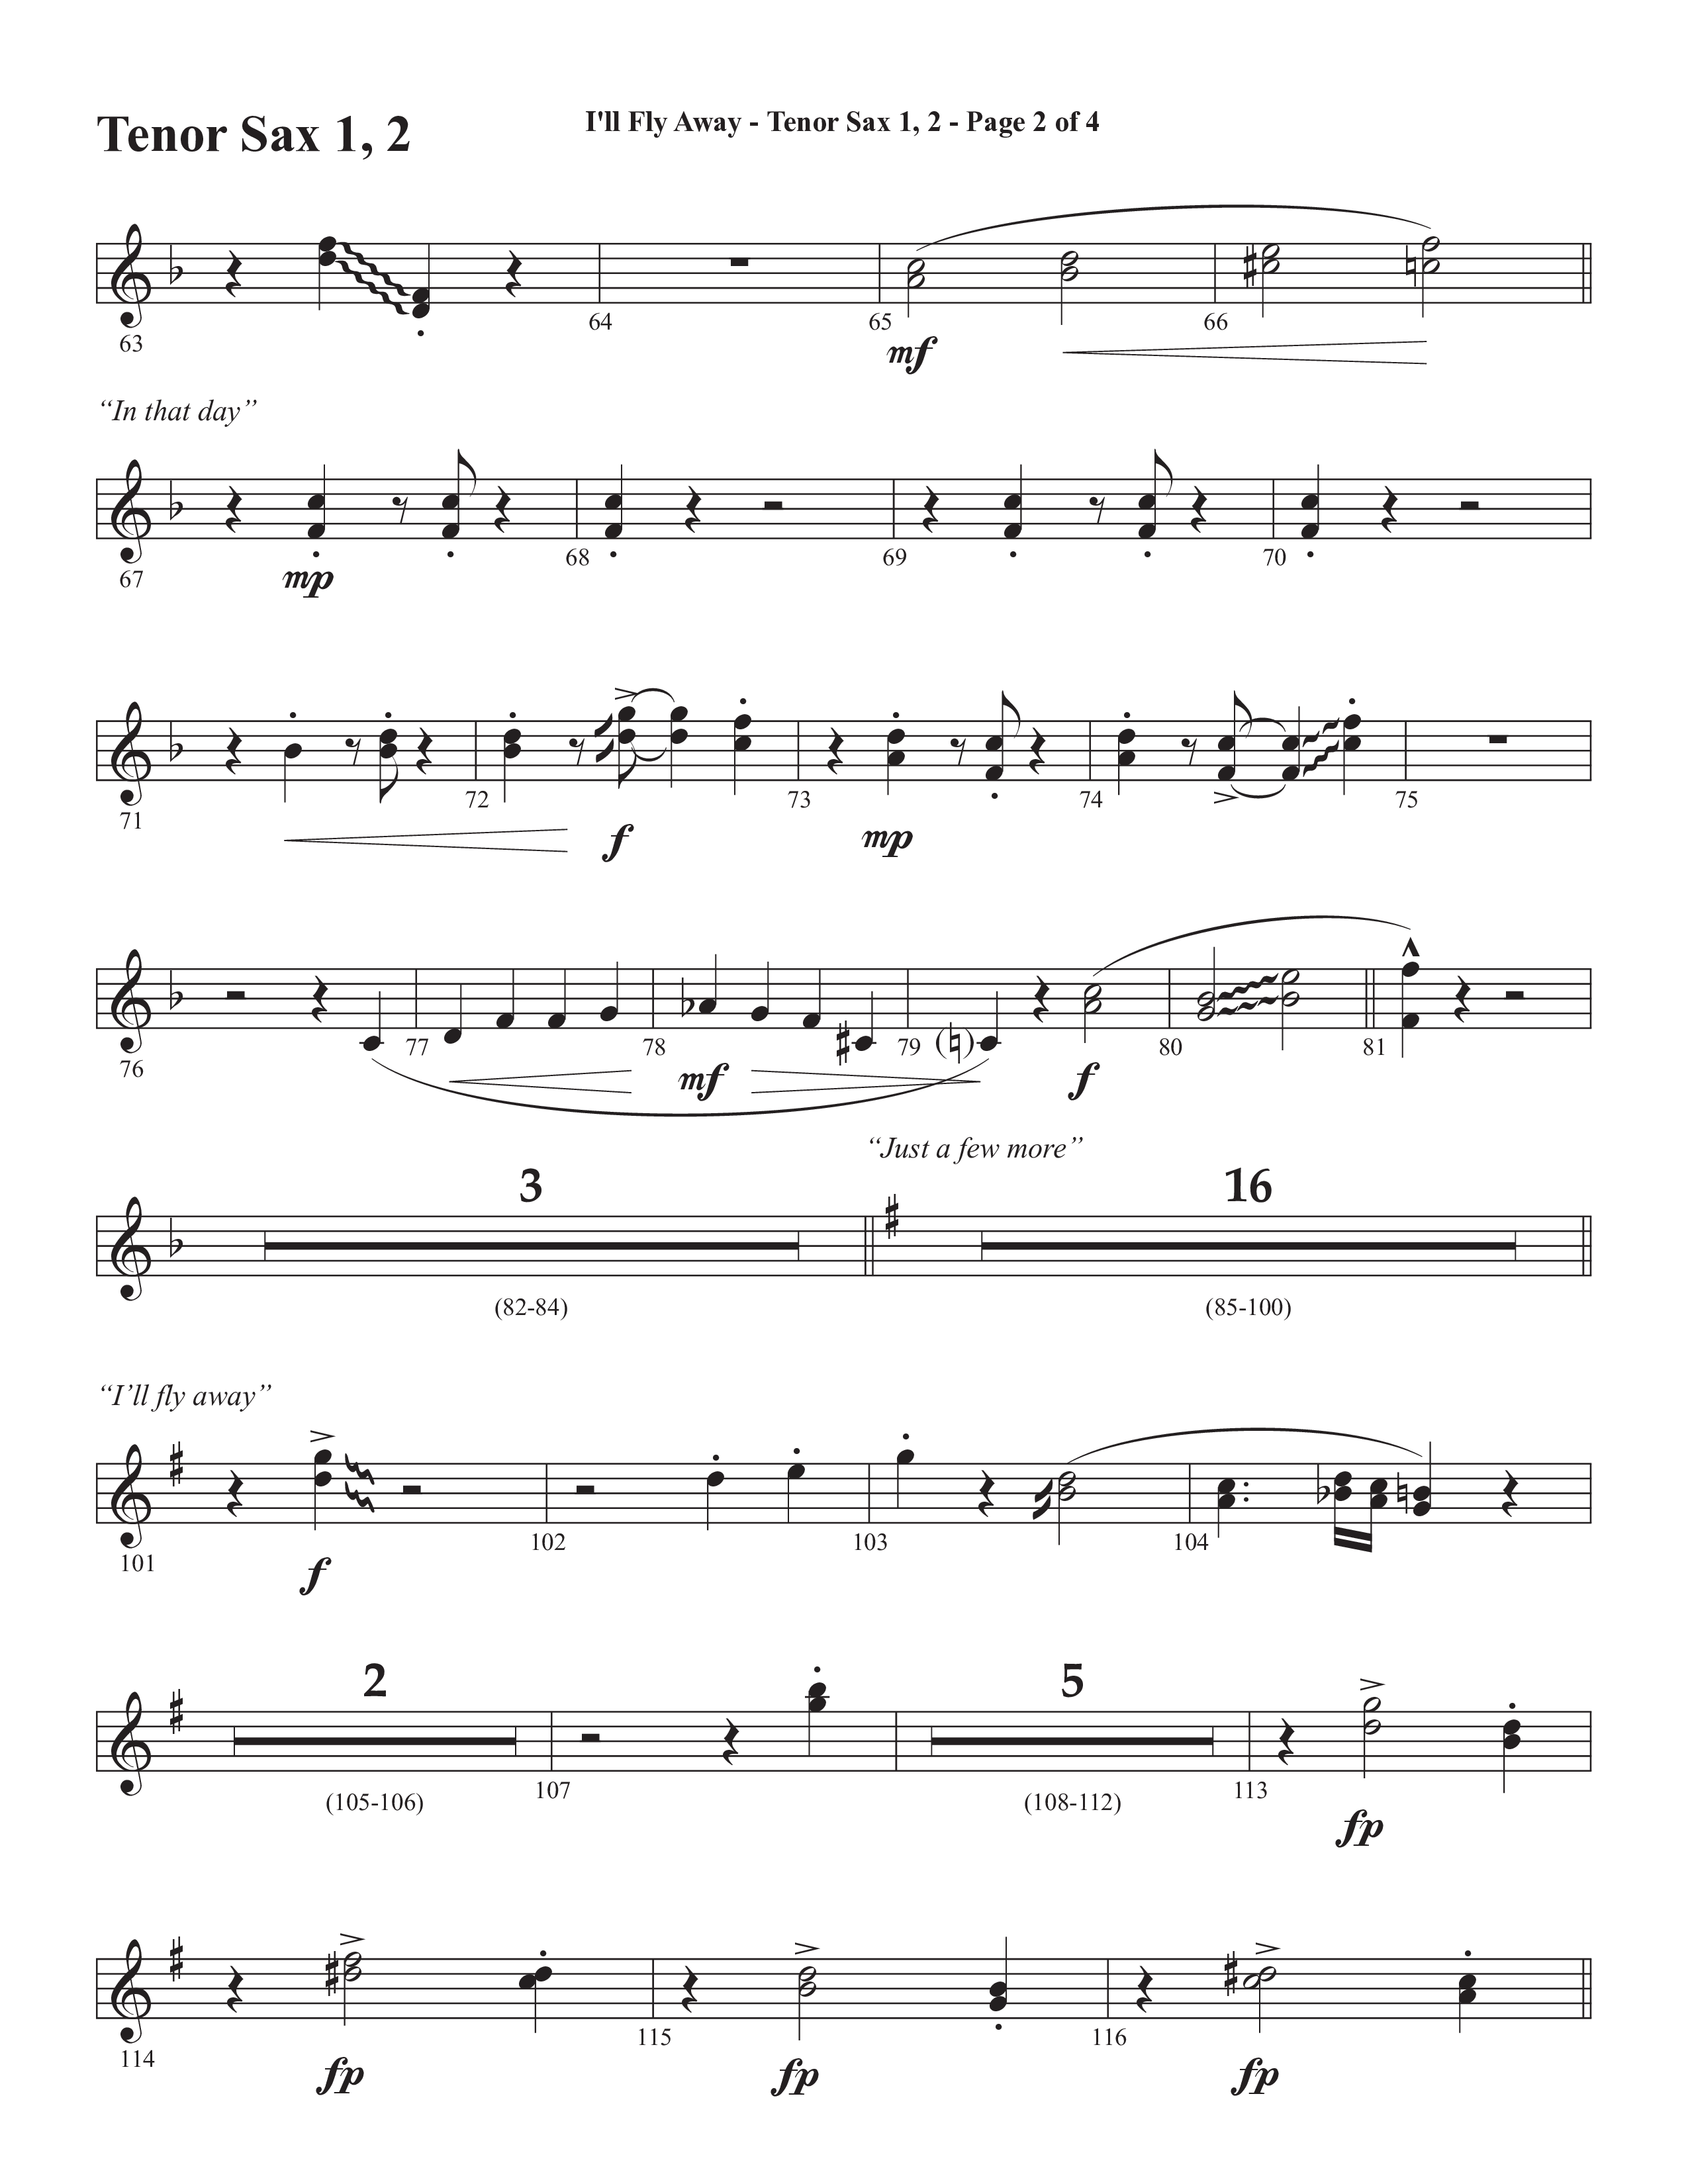 I'll Fly Away (Choral Anthem SATB) Tenor Sax 1/2 (Semsen Music / Arr. Michael Lee)